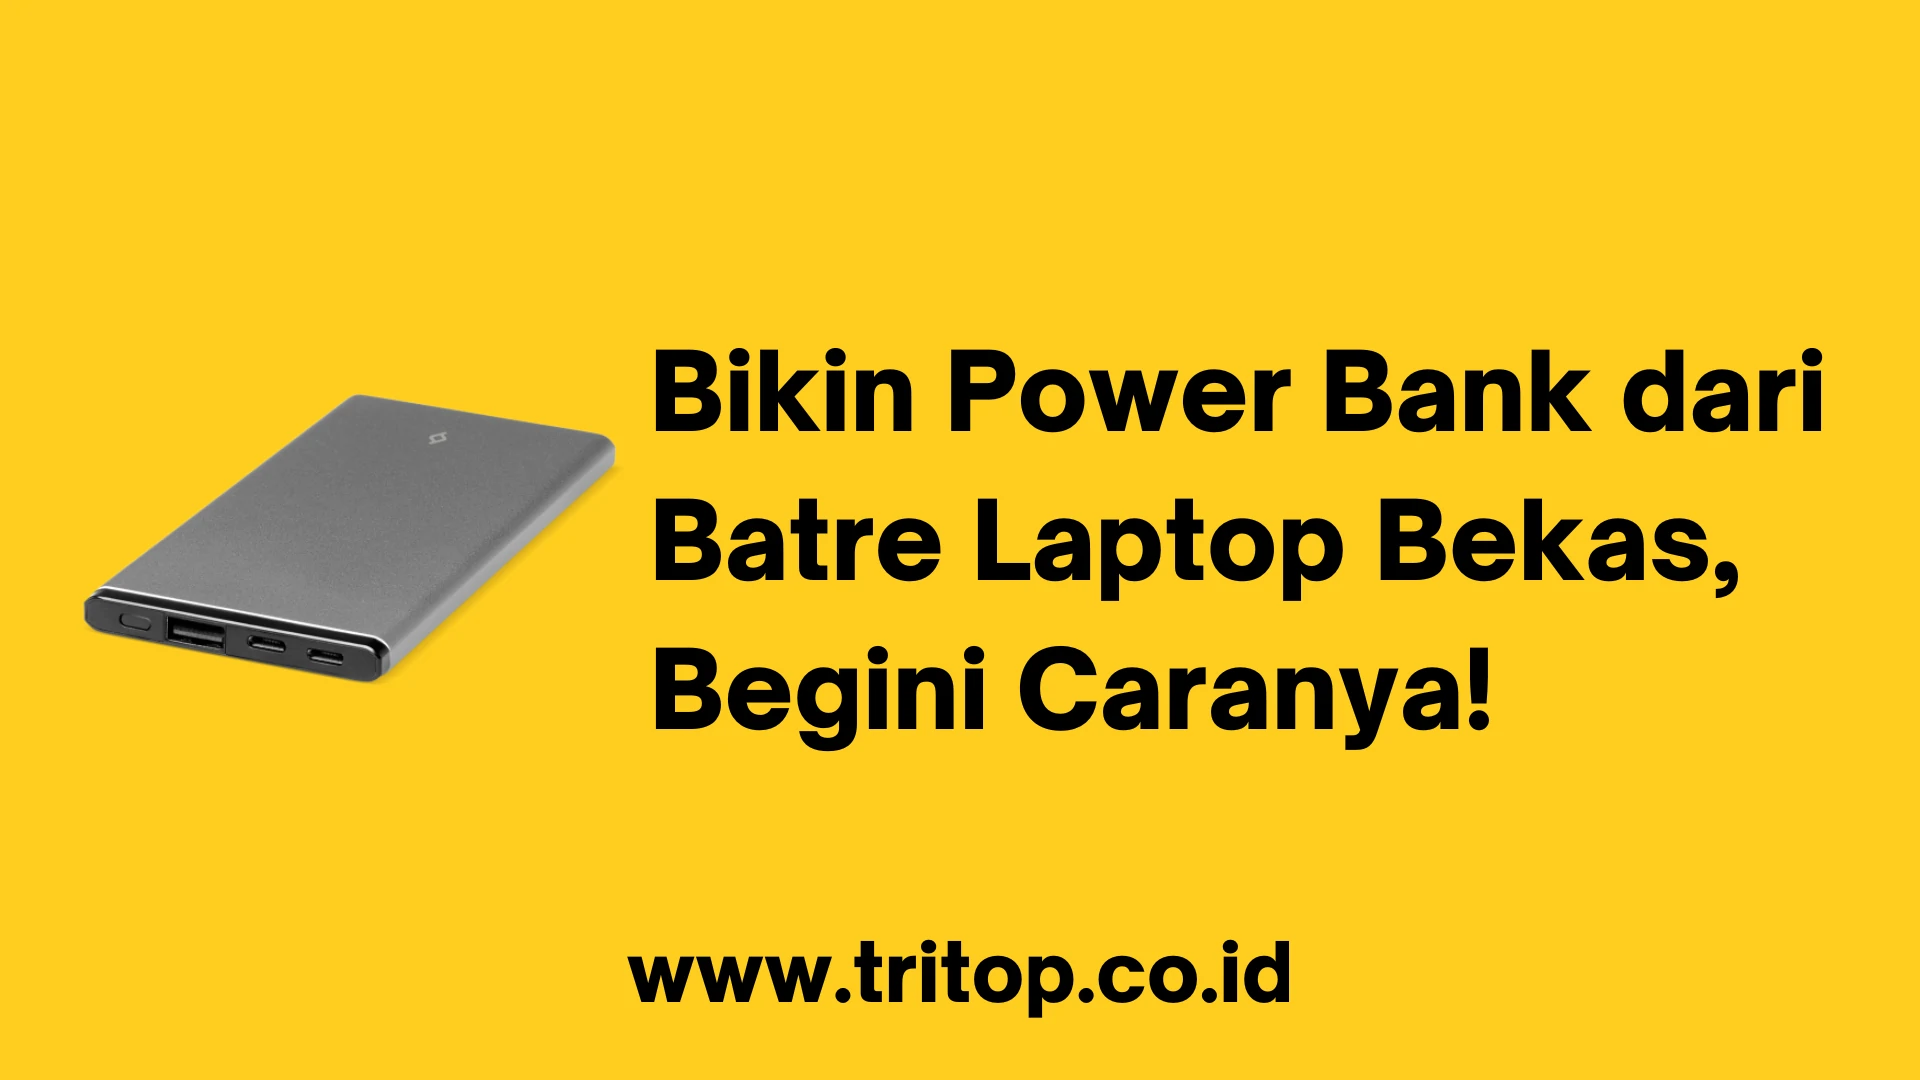 Bikin Power Bank dari Batre Laptop Bekas